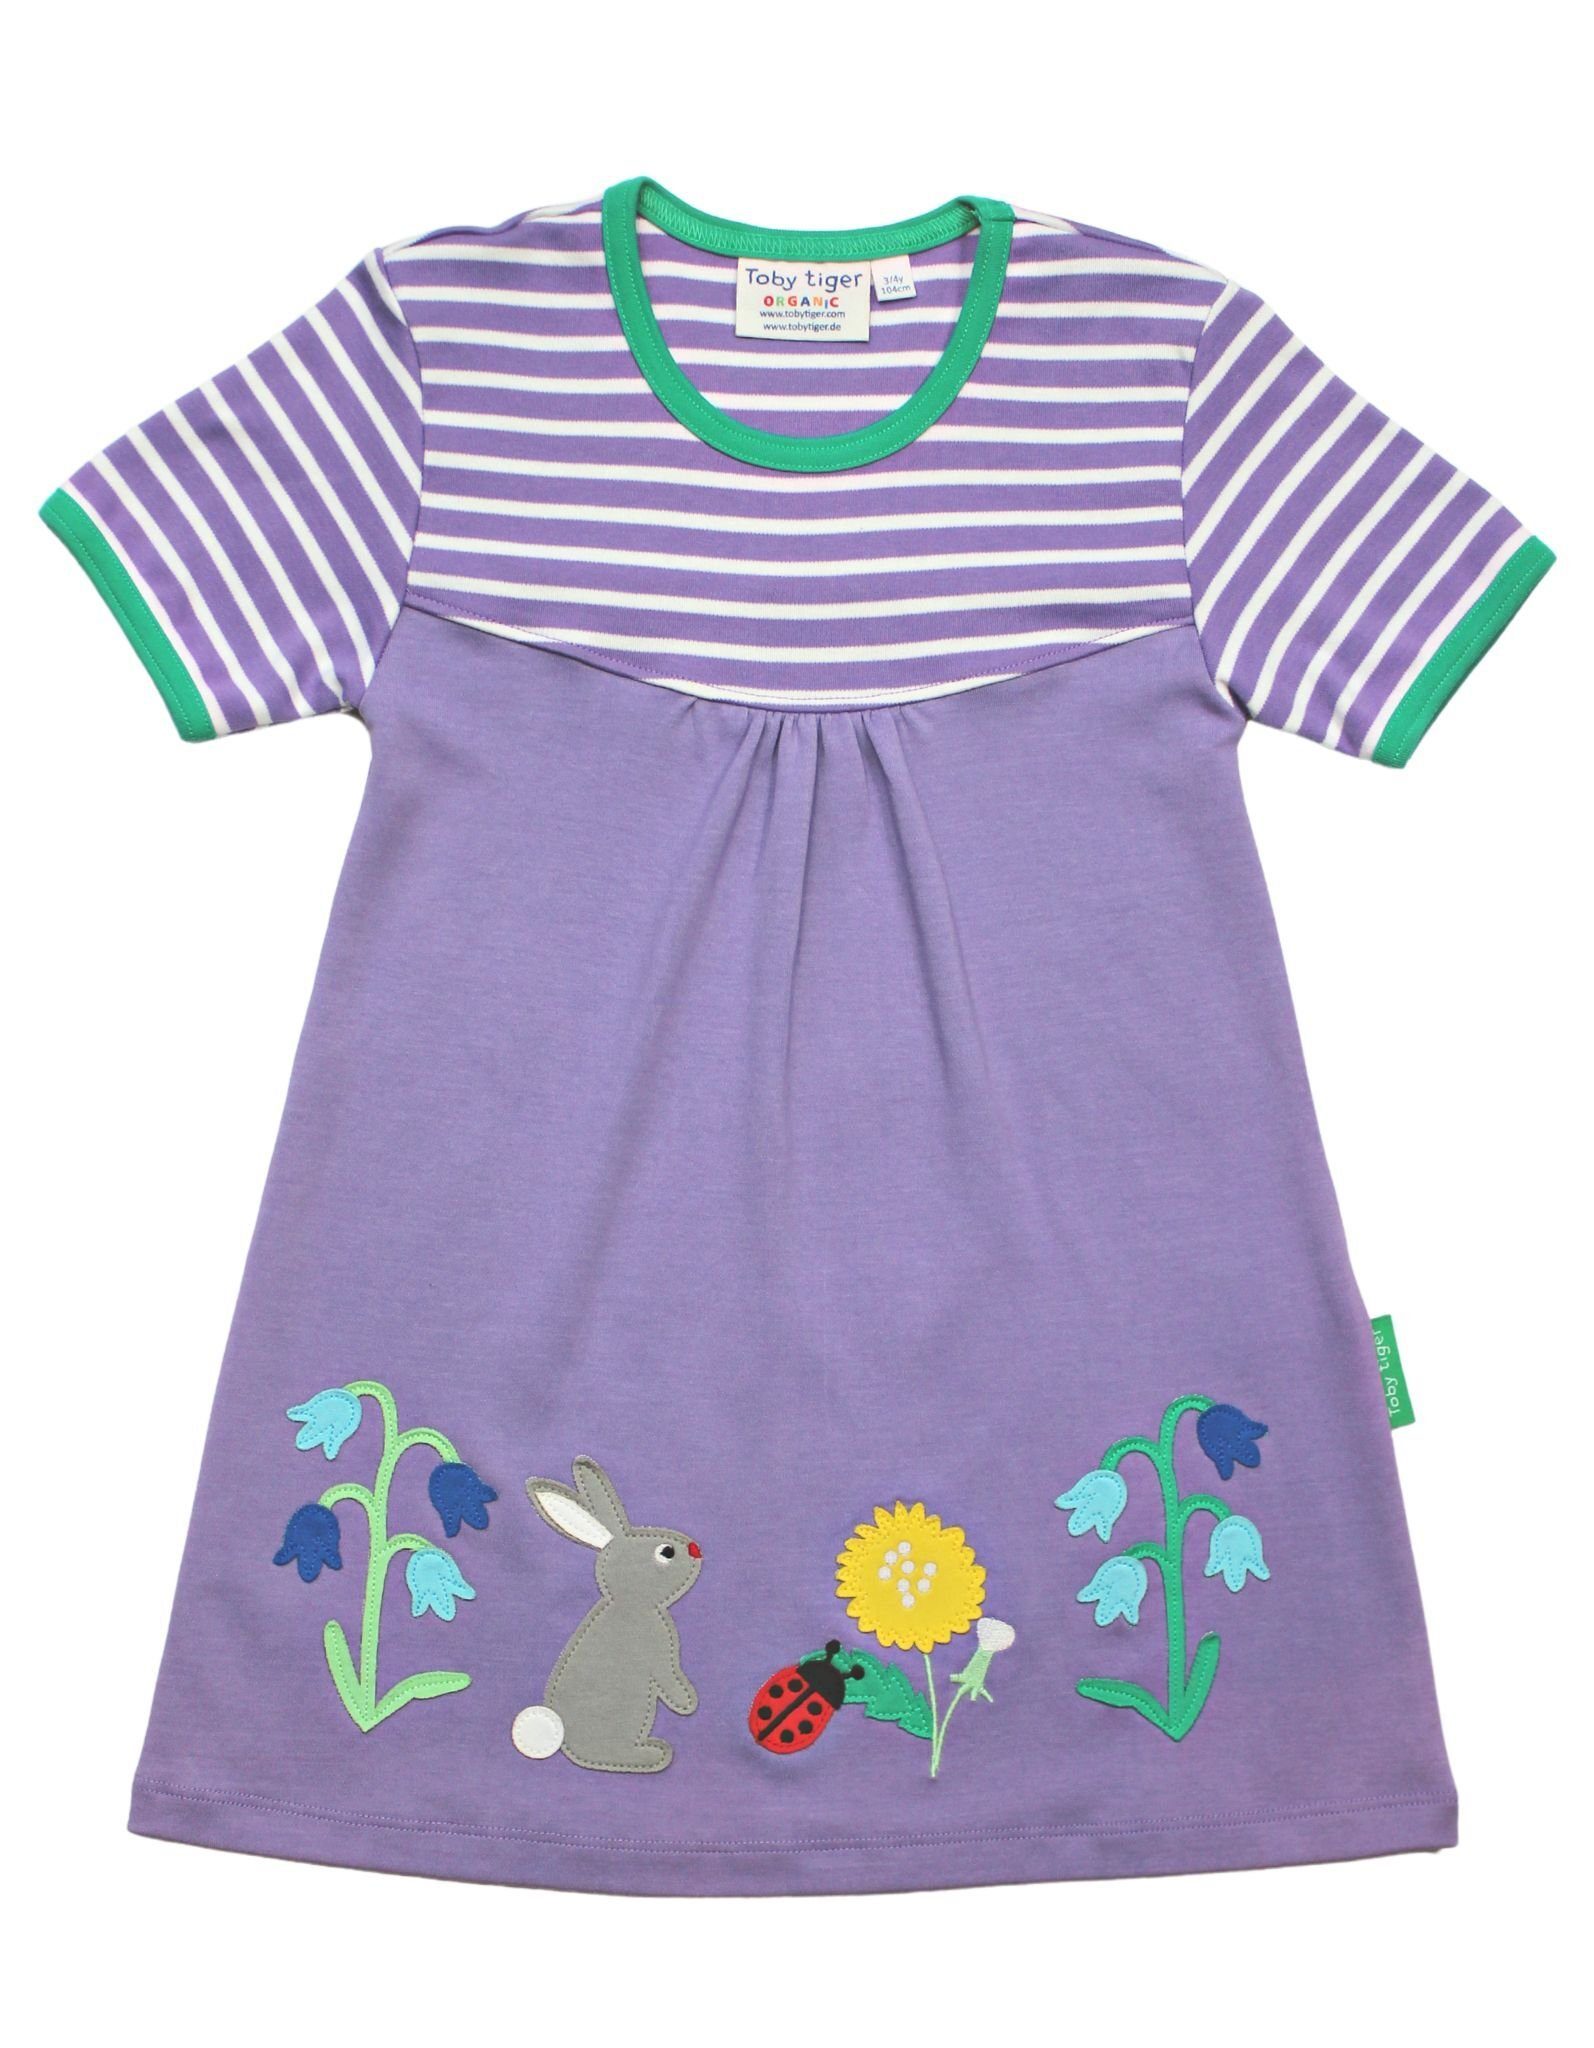 Toby Tiger Shirtkleid Kinder Kleid Frühlings mit Applikation